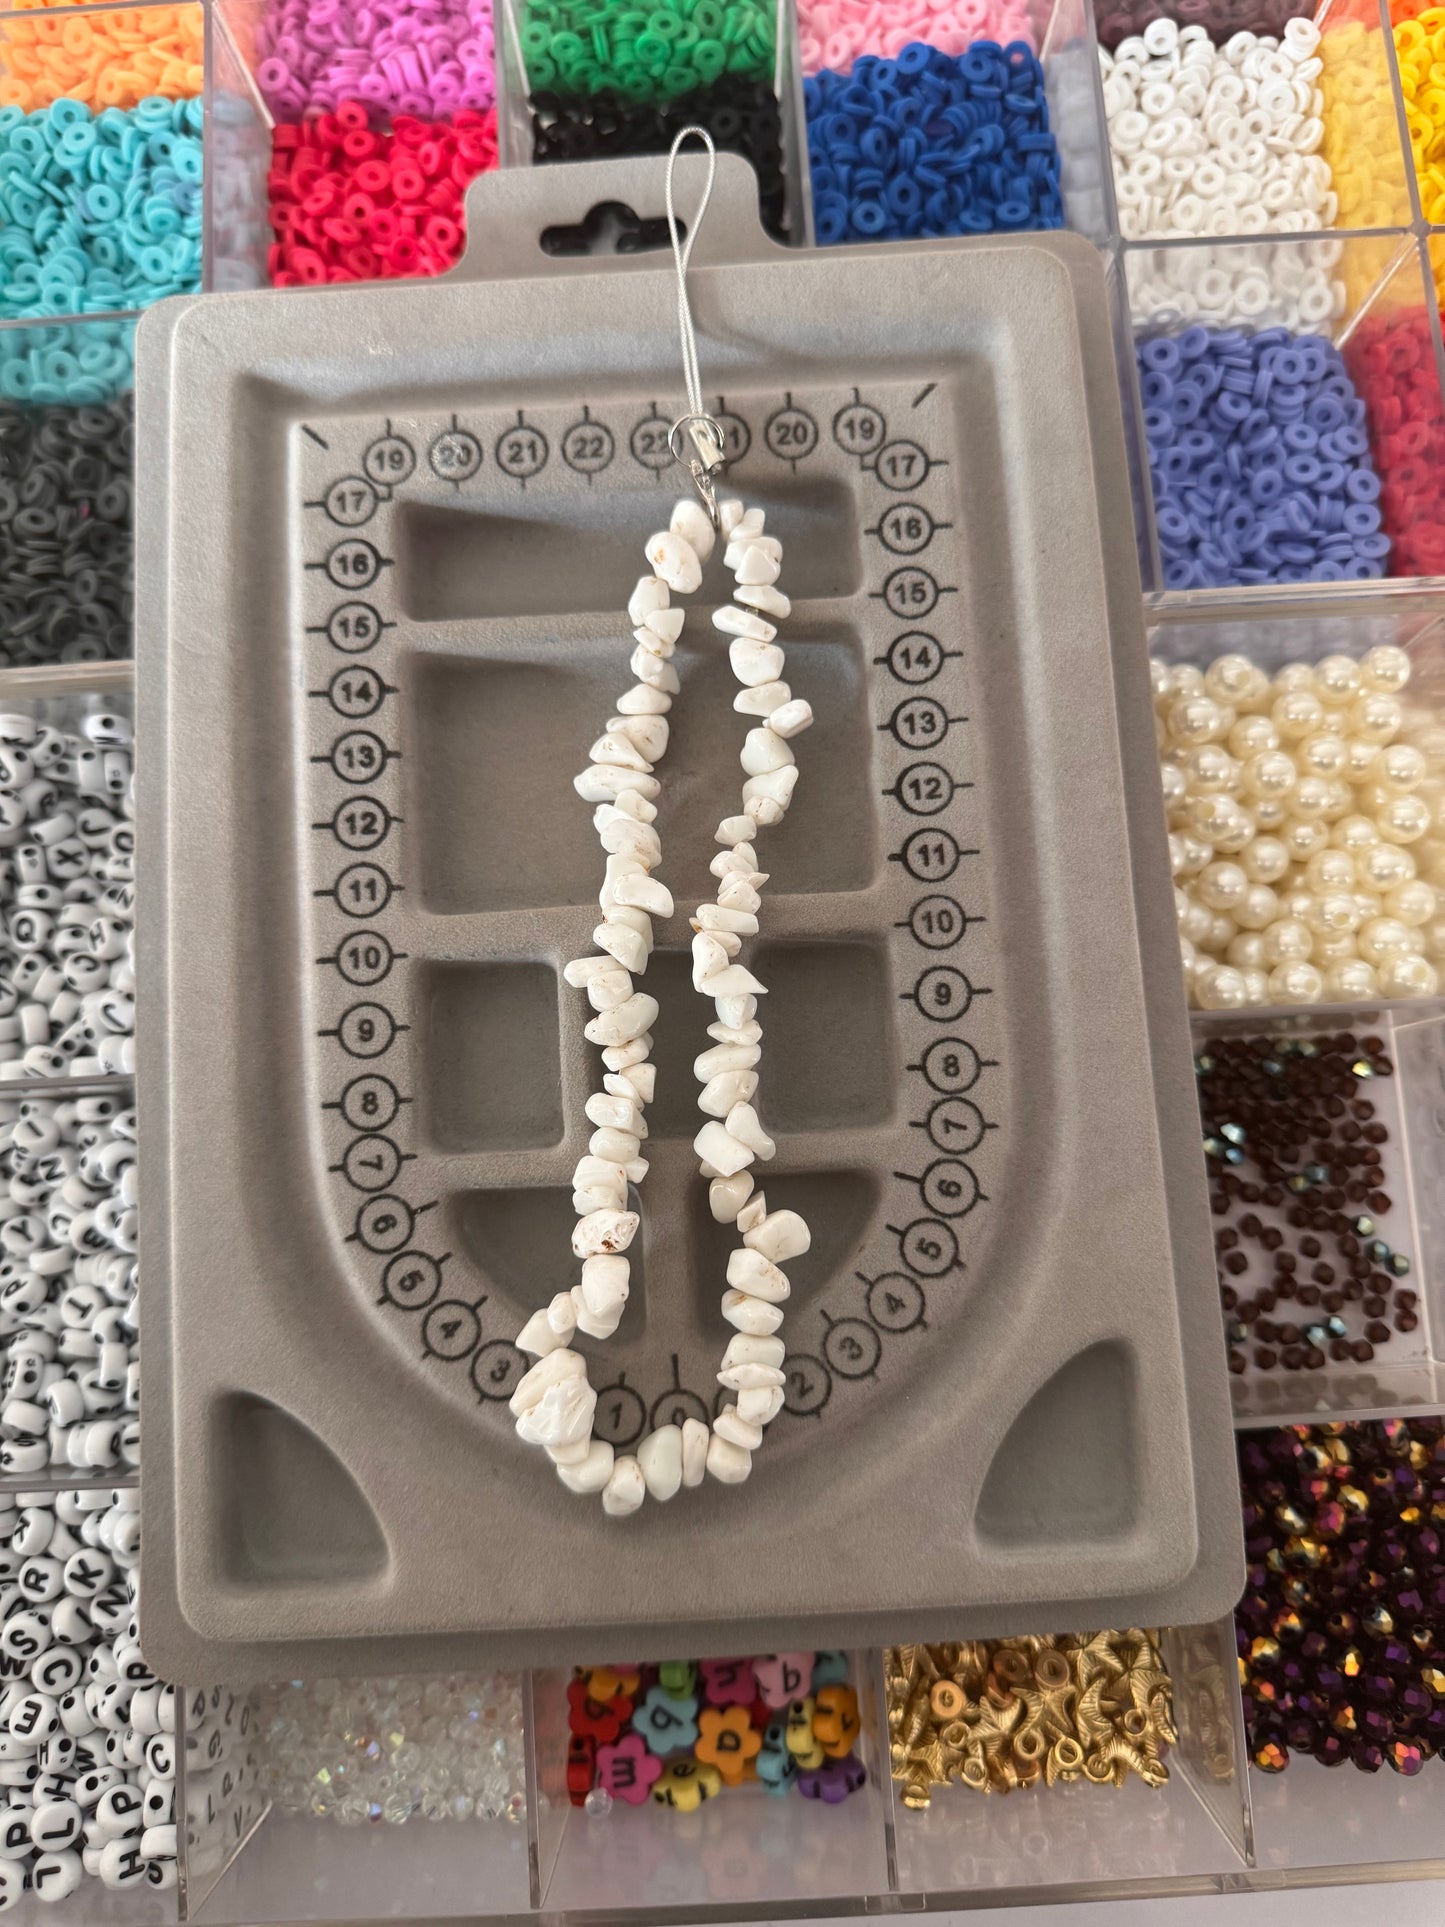 Broken beads phone charms